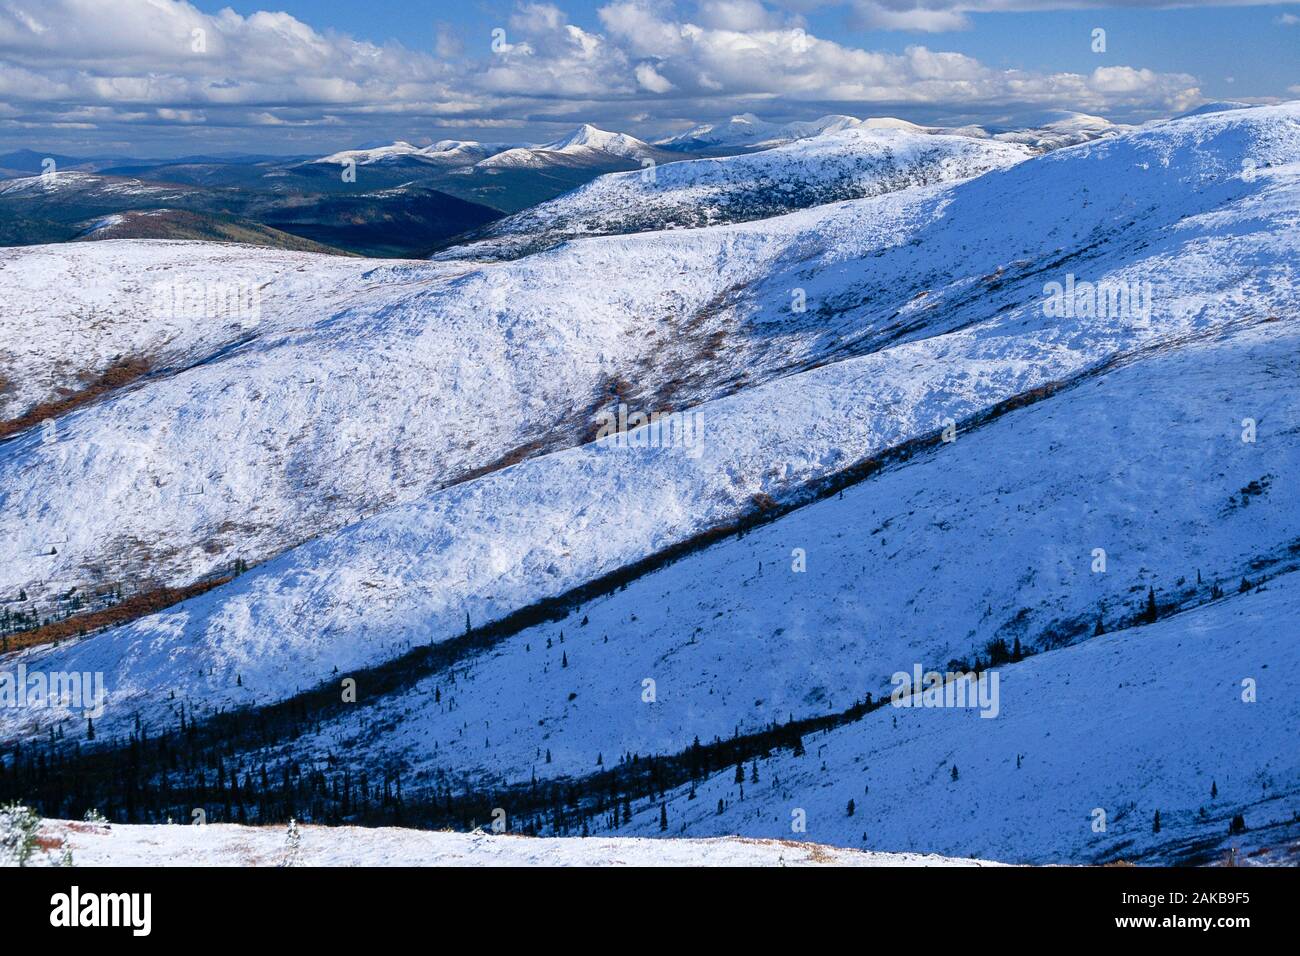 Landscape with snow-covered hills in winter, near Dawson City, Yukon Territory, Canada Stock Photo